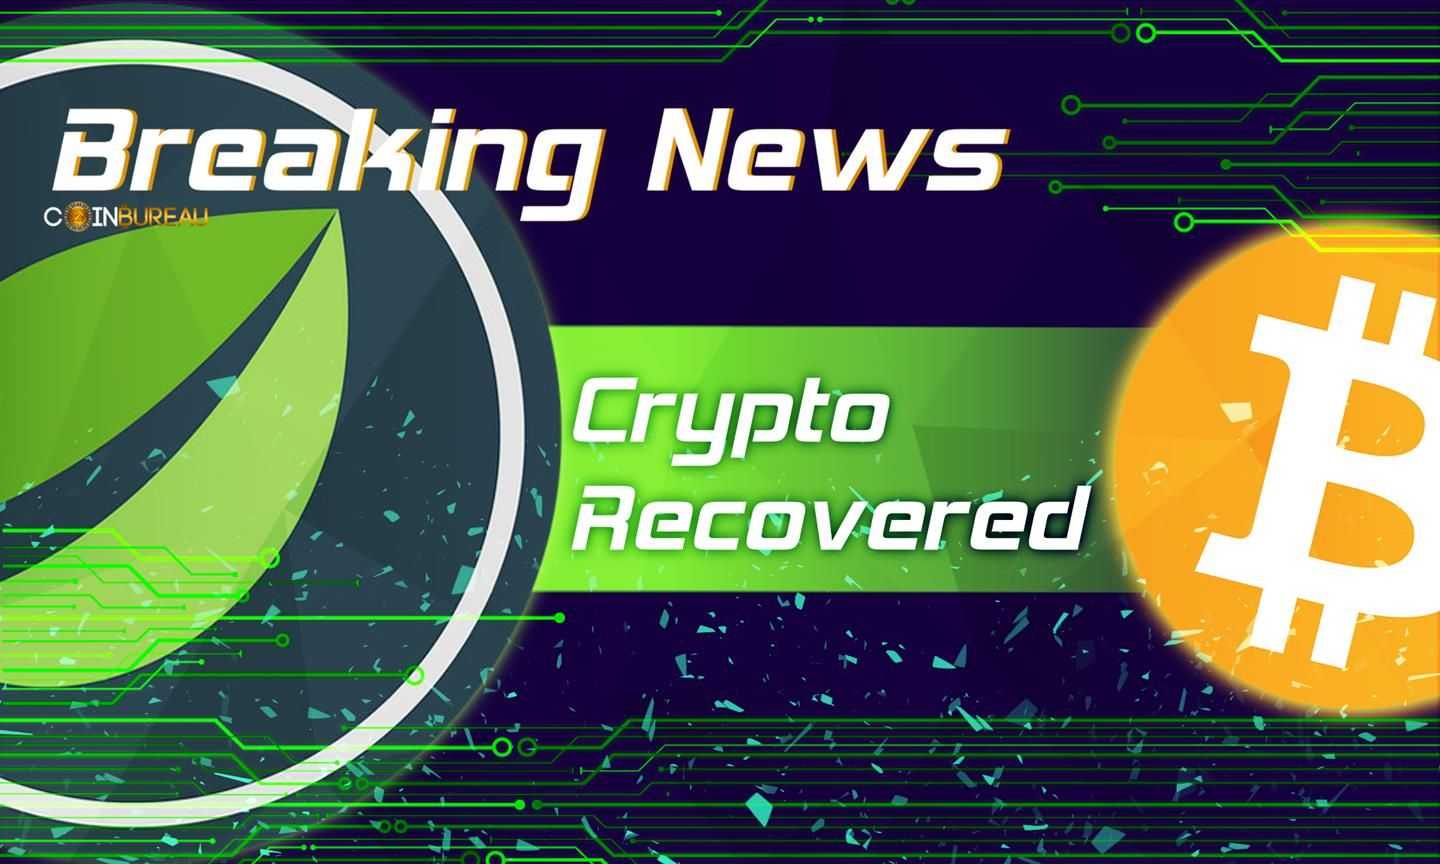 Stolen Bitfinex Crypto Recovered - Feds Seize $3.6 Billion in BTC